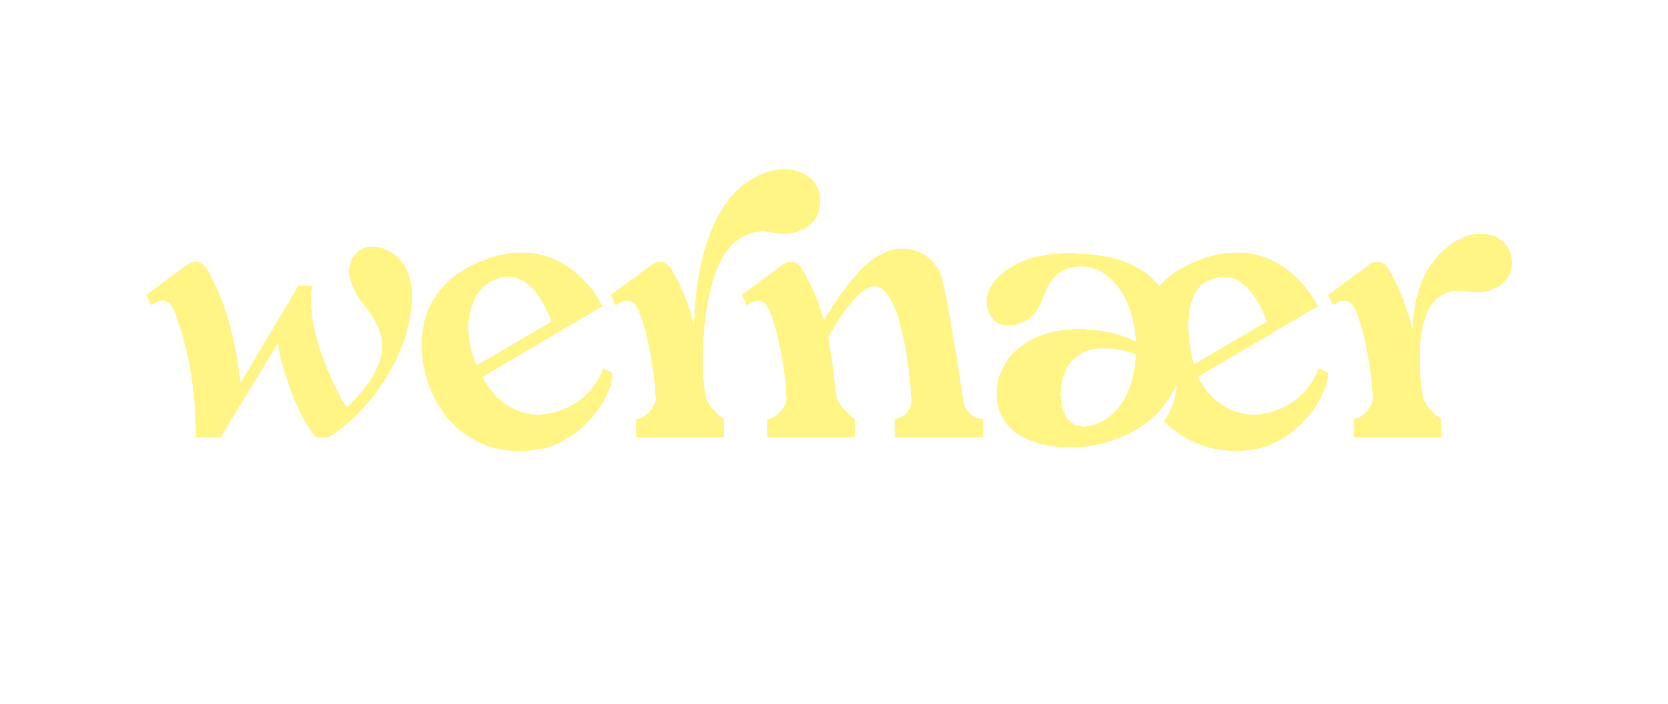 wernaer GmbH logo